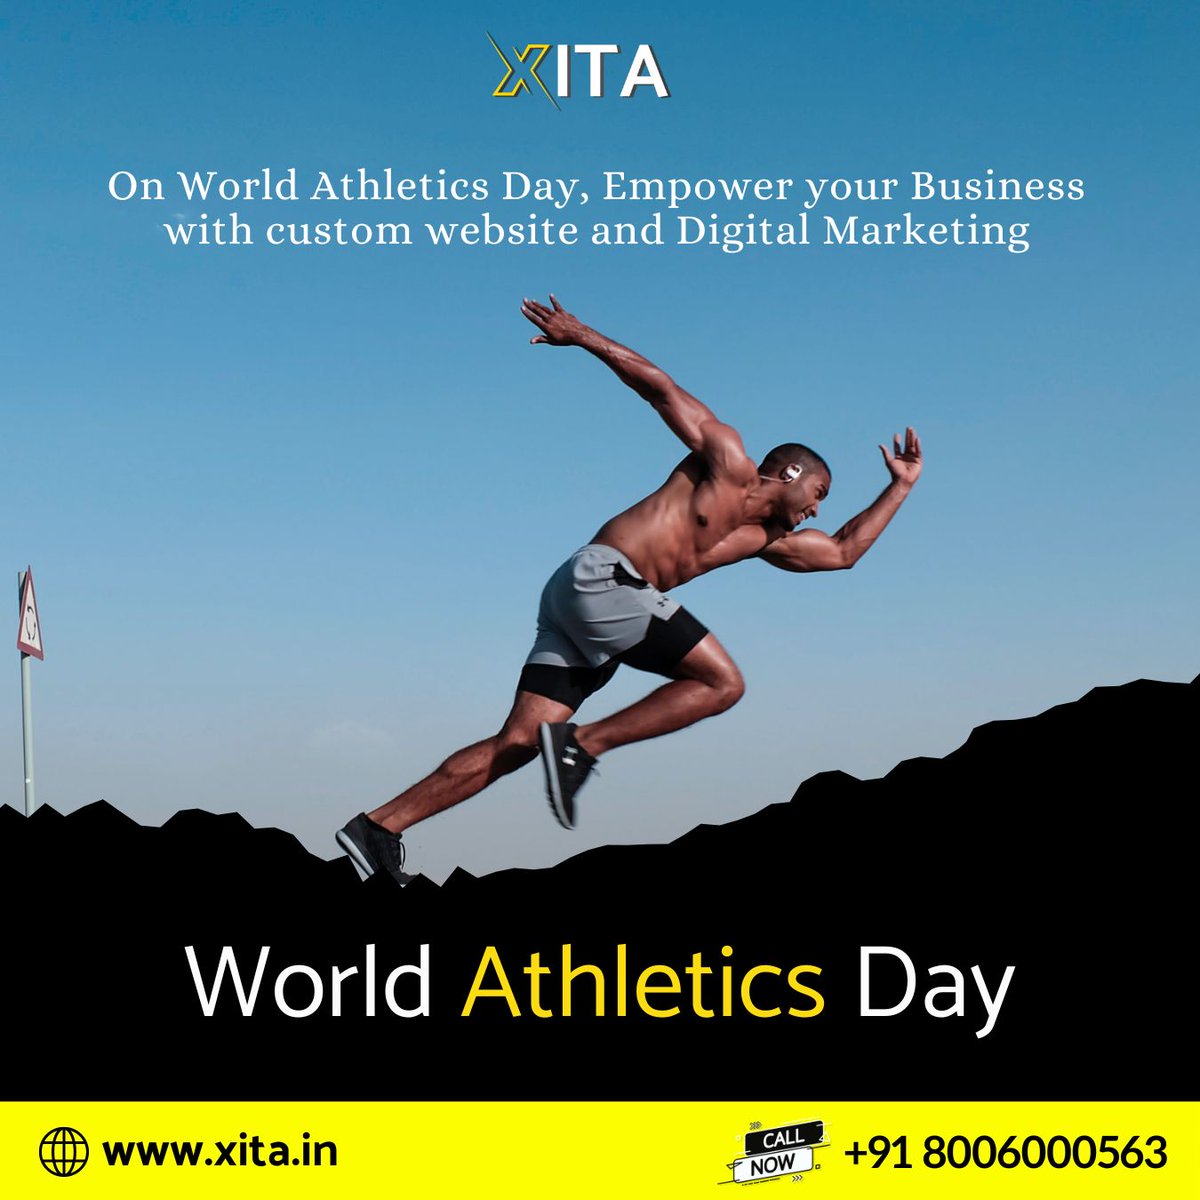 Rabindranath Tagore Jayant & World Athletics Day! 

#xitatechnologies #diversityintech #InnovateForImpact #Excellence